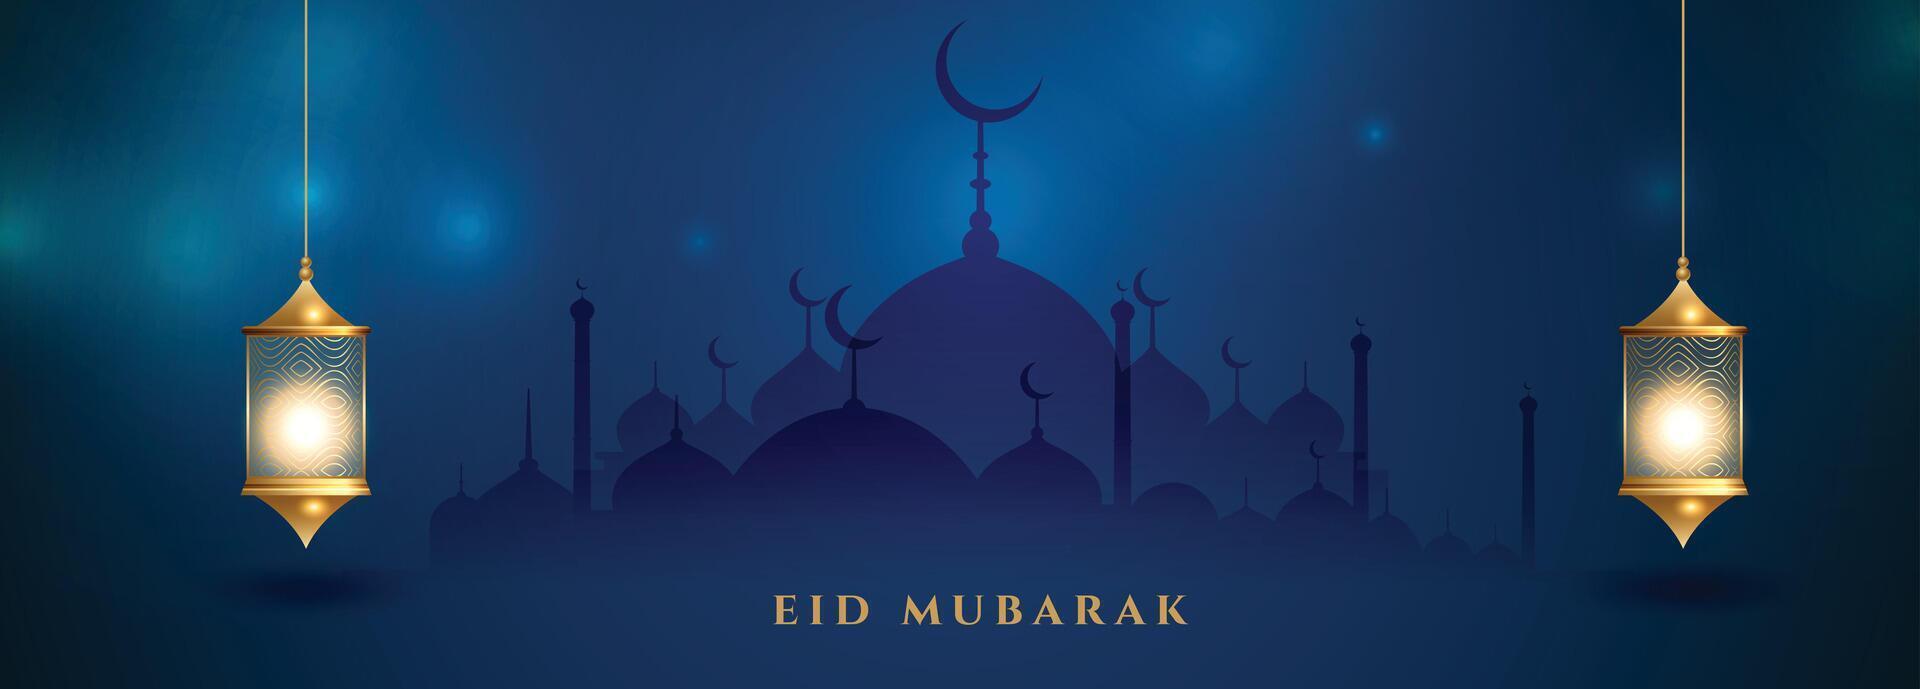 Islamitisch eid mubarak festival blauw banier ontwerp vector